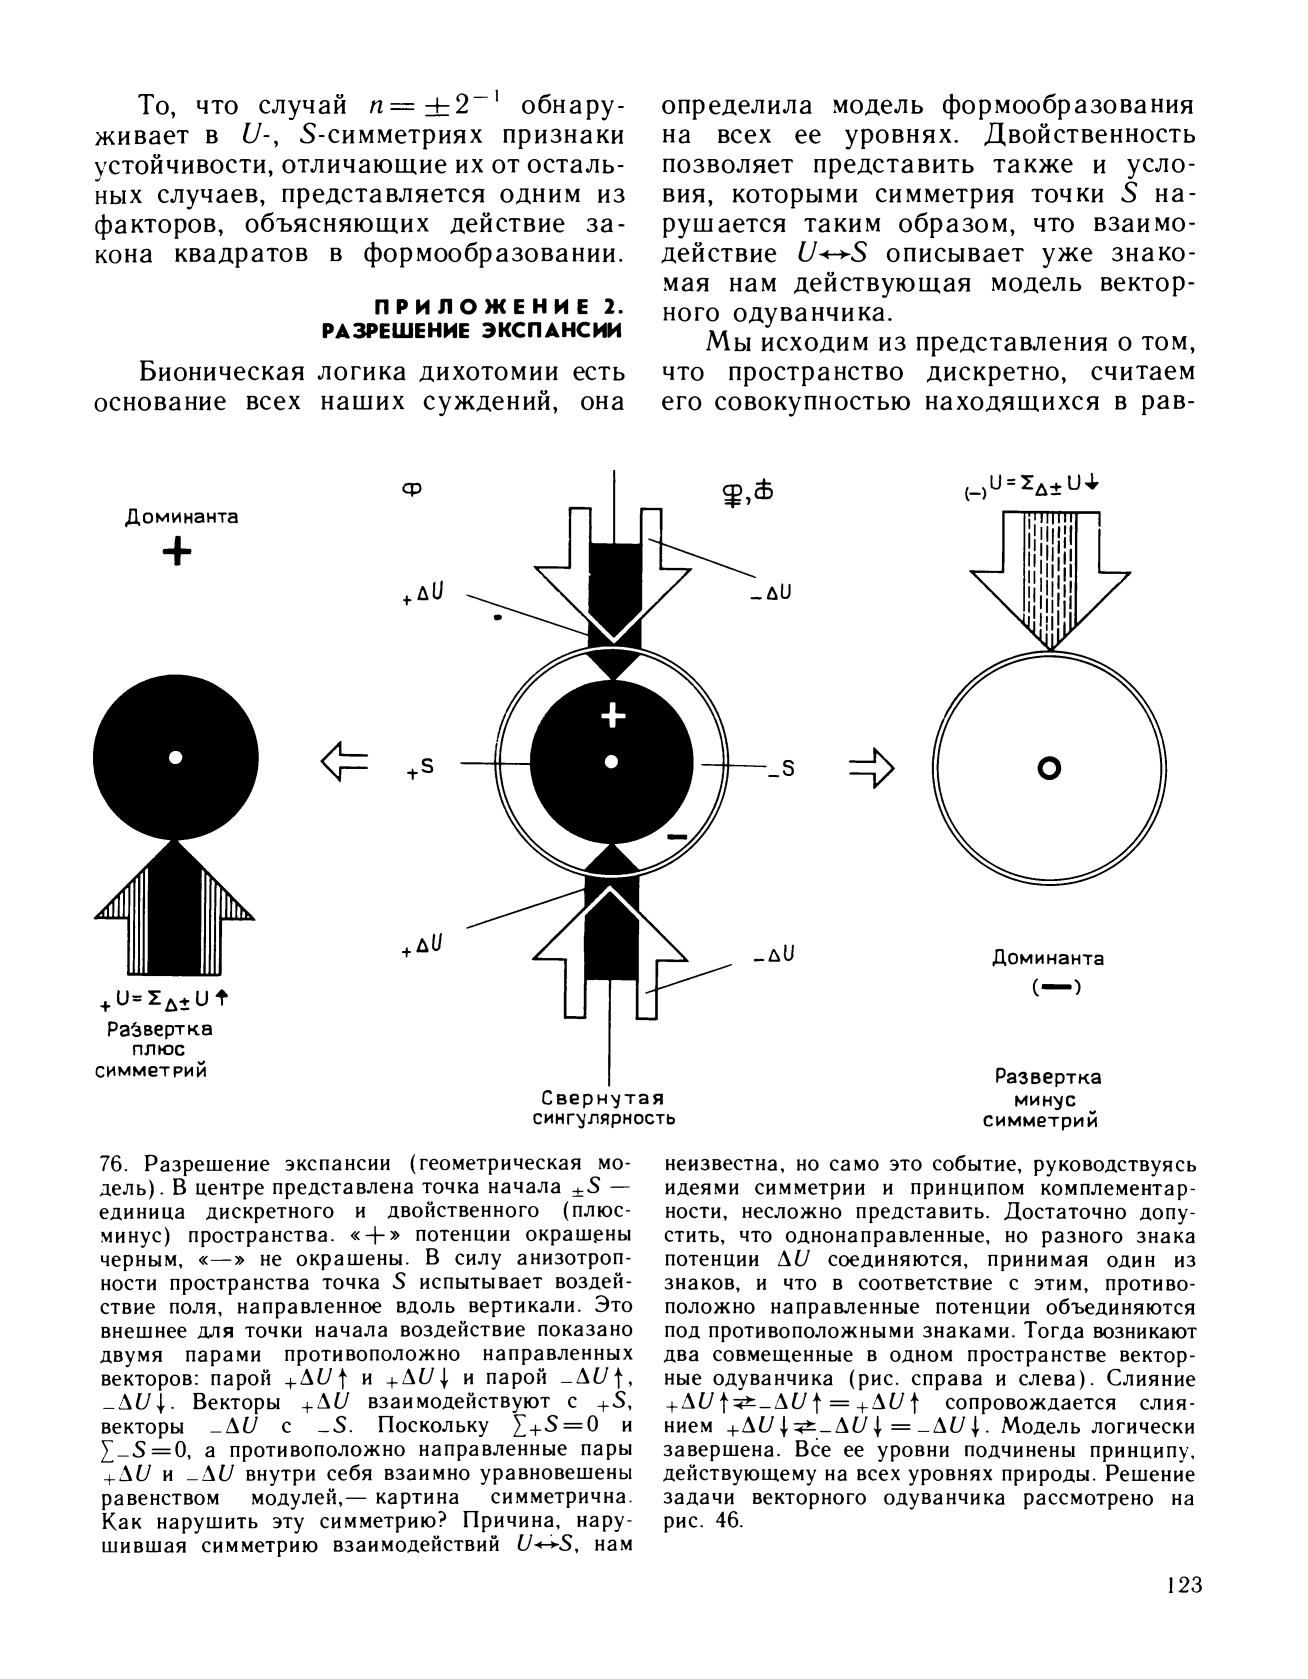 Золотое сечение : Три взгляда на природу гармонии / И. Ш. Шевелев, М. А. Марутаев, И. П. Шмелев. — Москва : Стройиздат, 1990